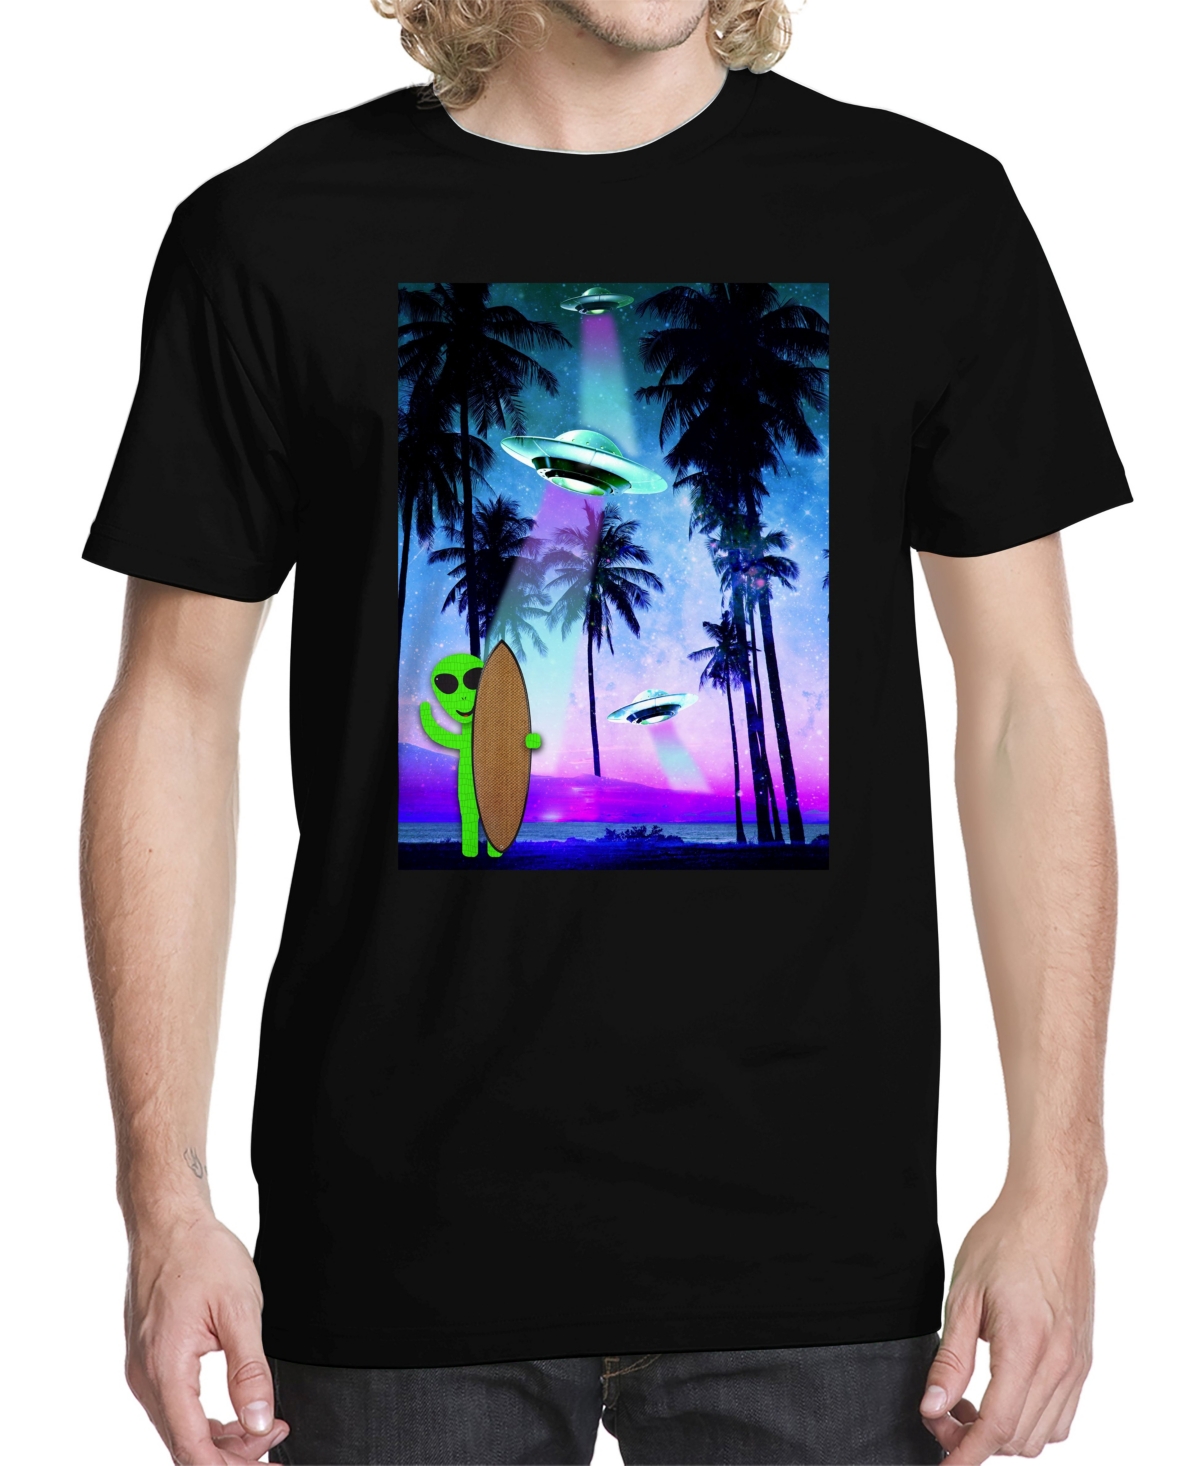 Men's Tropical Space Graphic T-shirt - Black